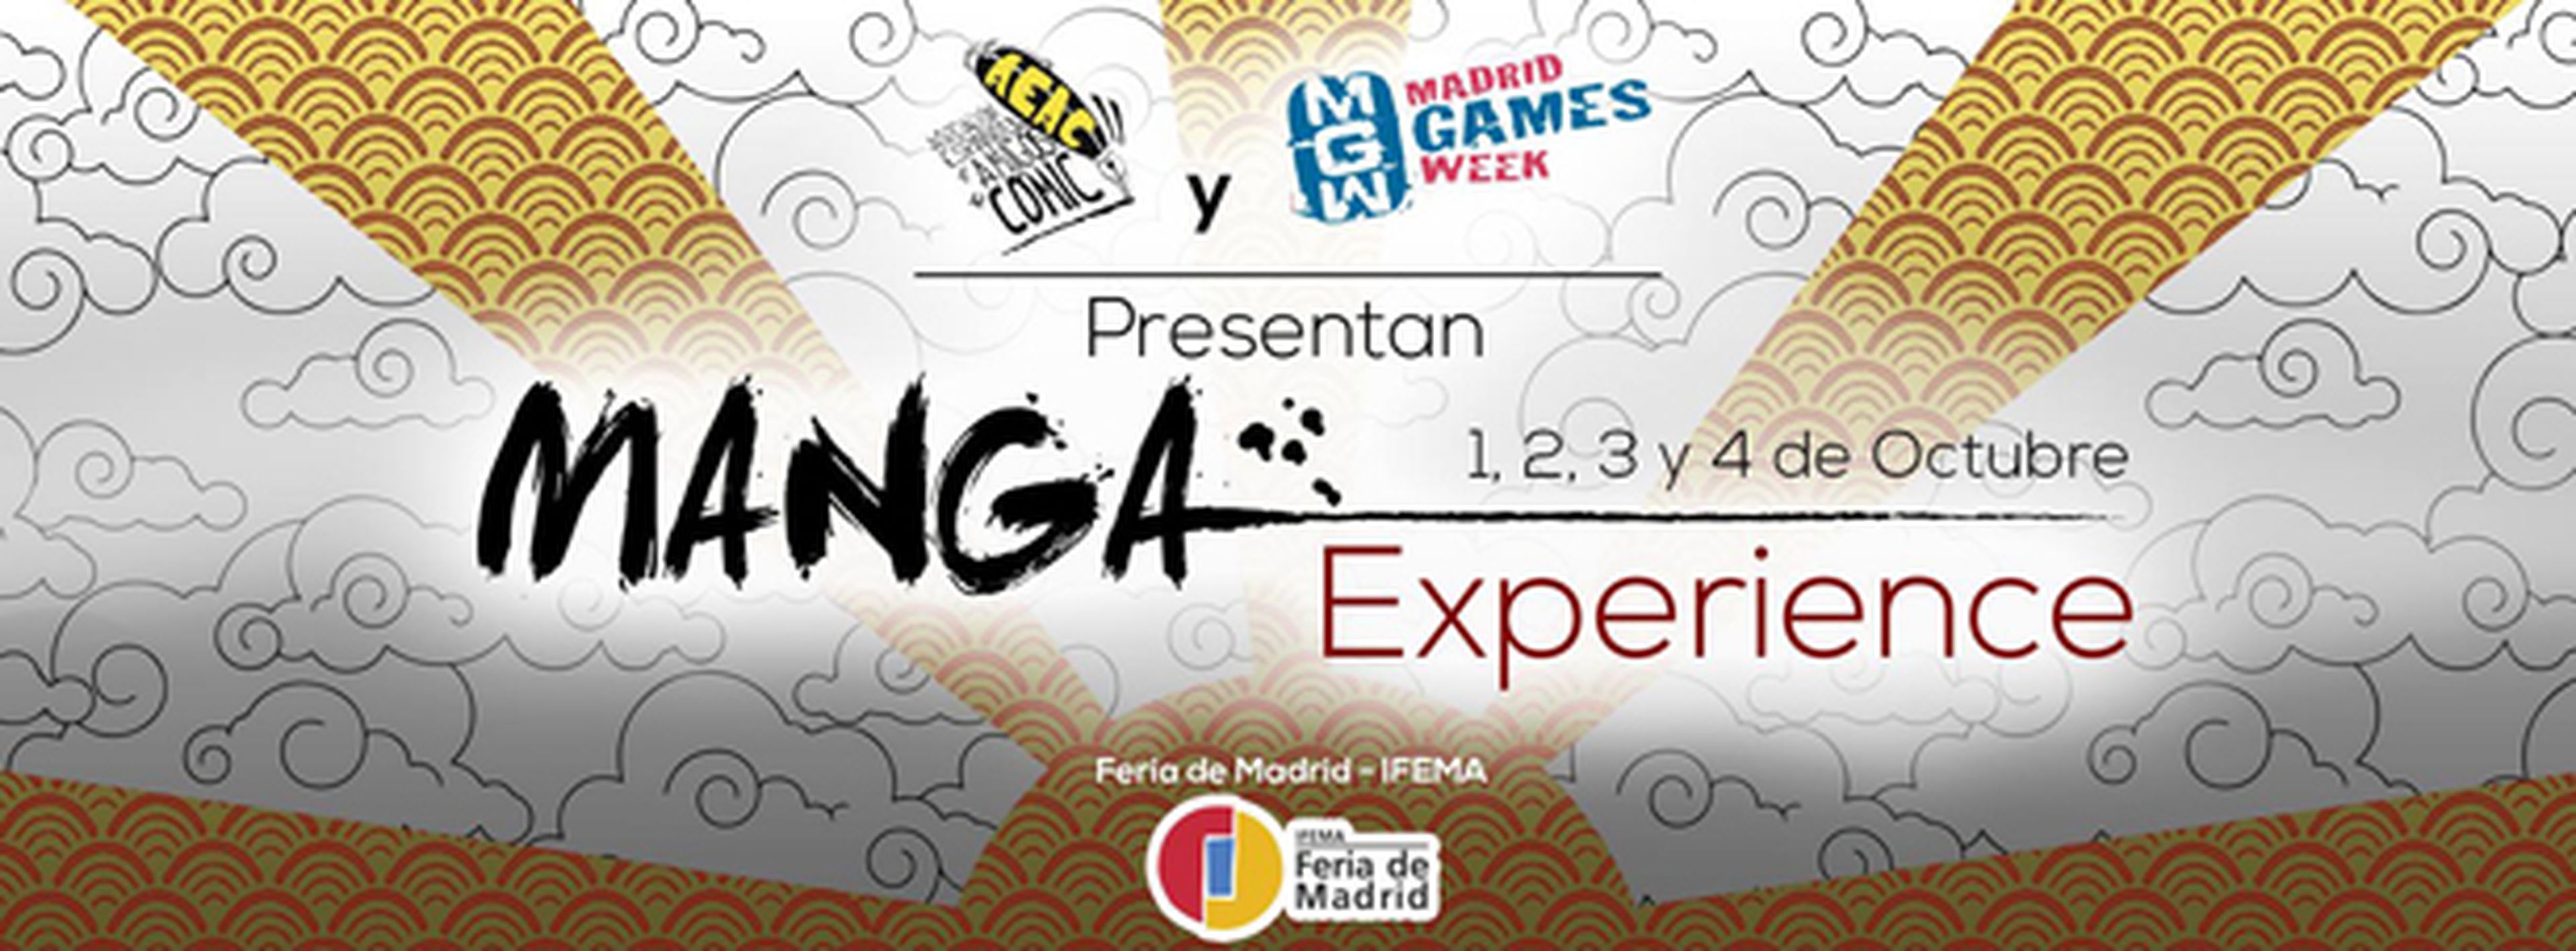 Madrid Games Week recibe al espacio Manga Experience